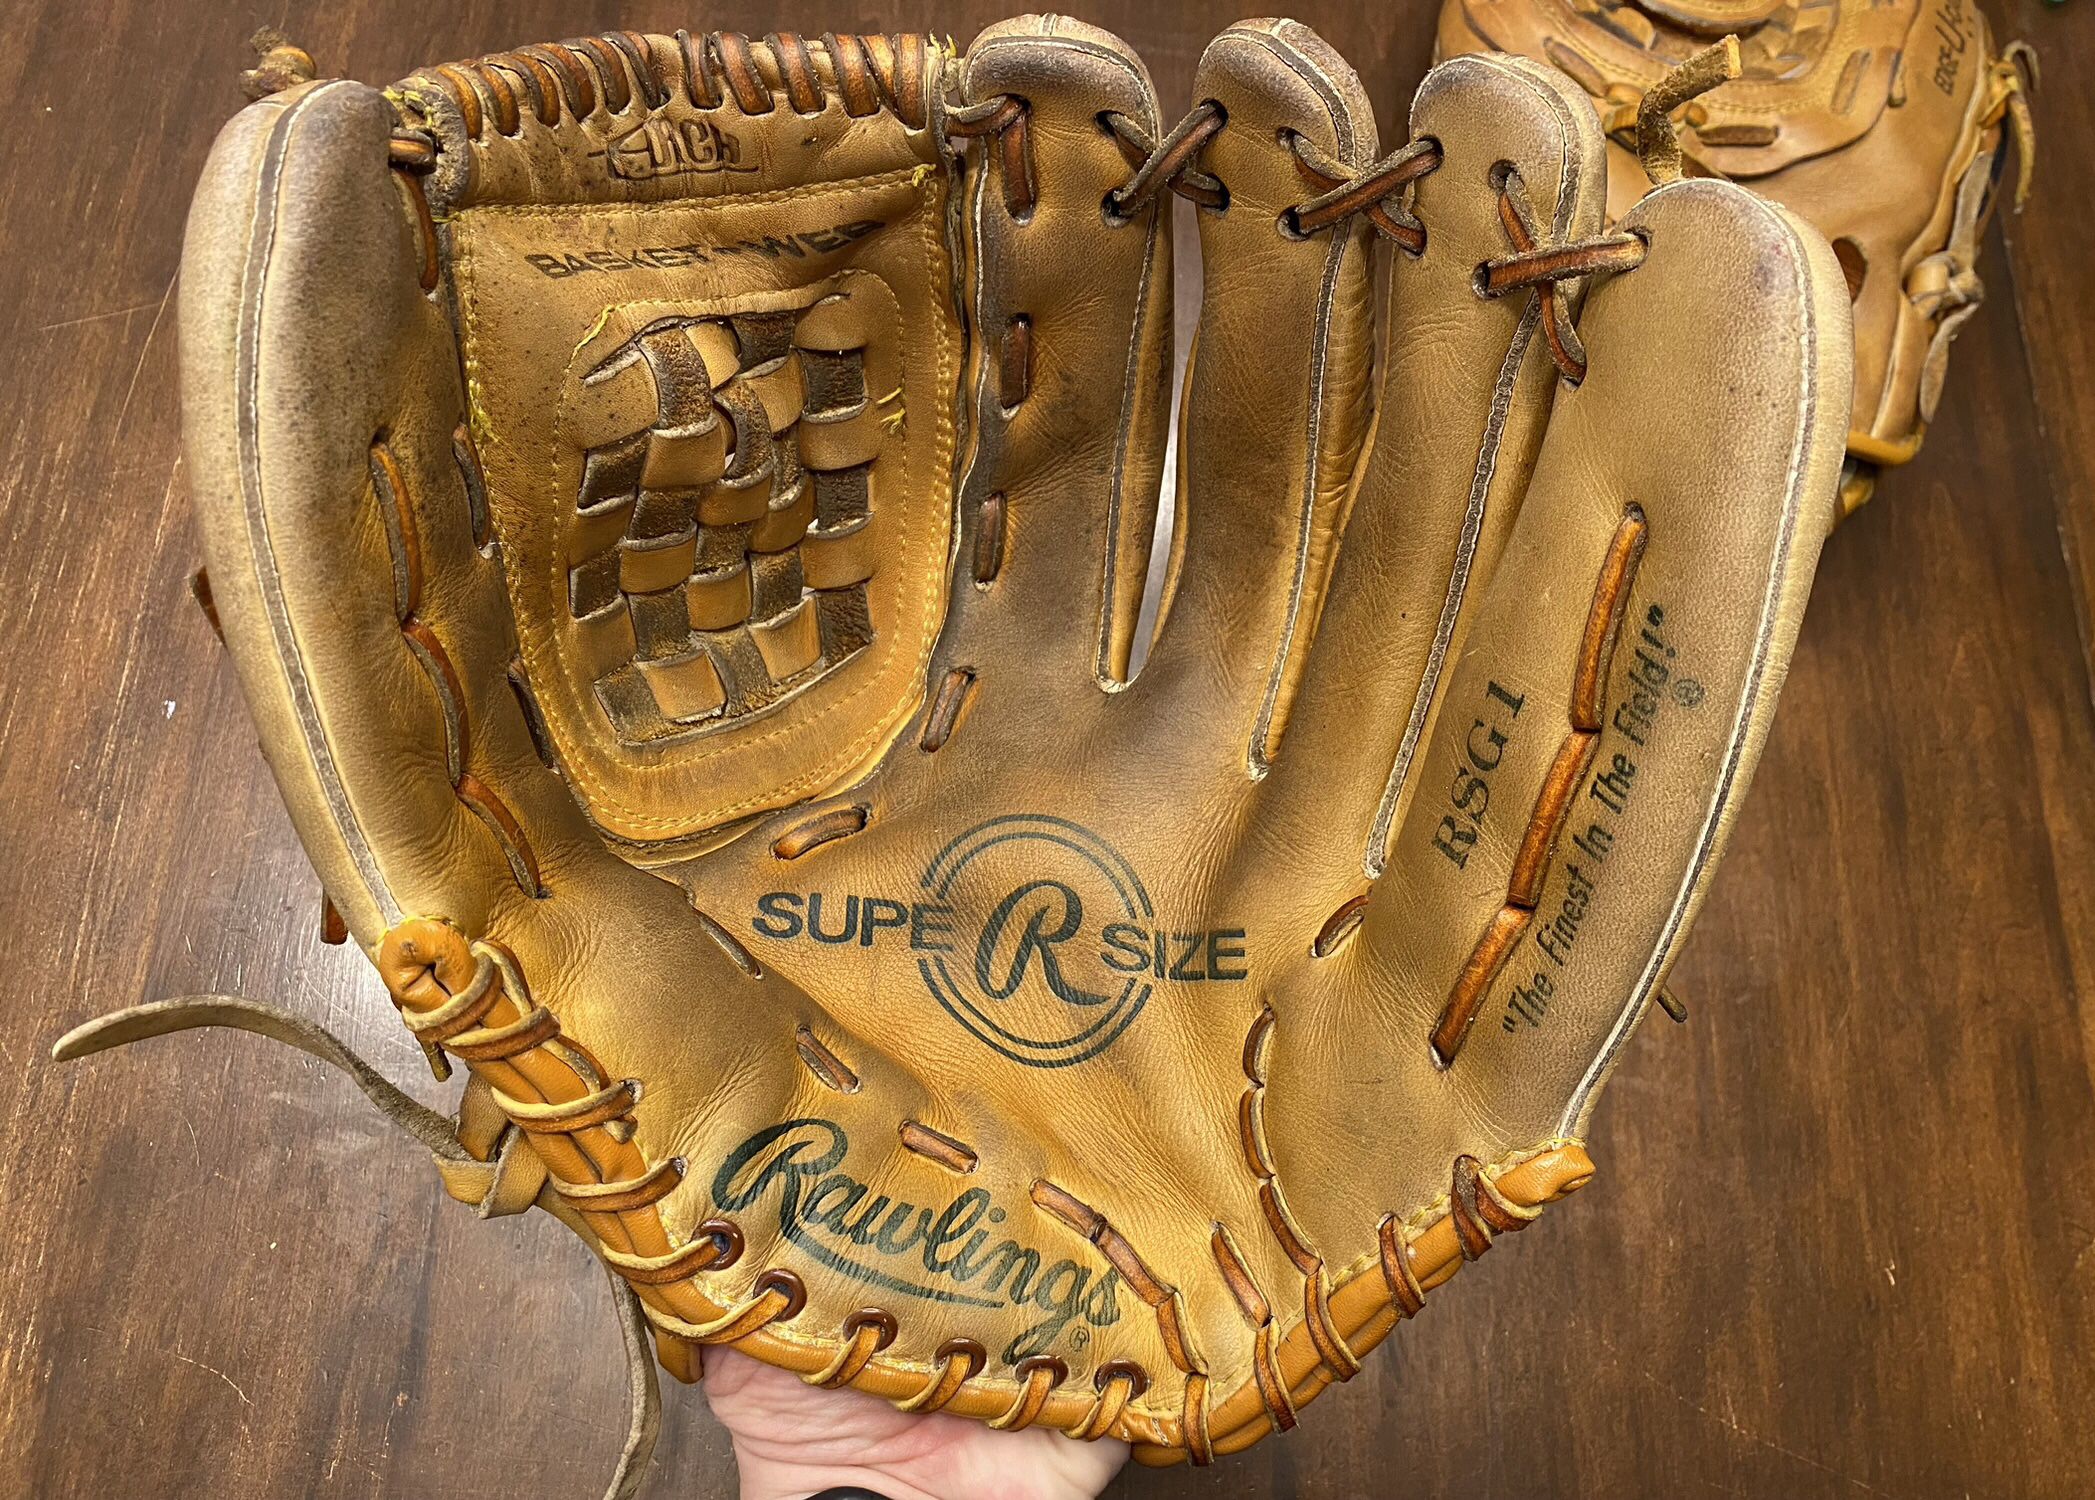 Two Large Rawlings Softball / Baseball Gloves